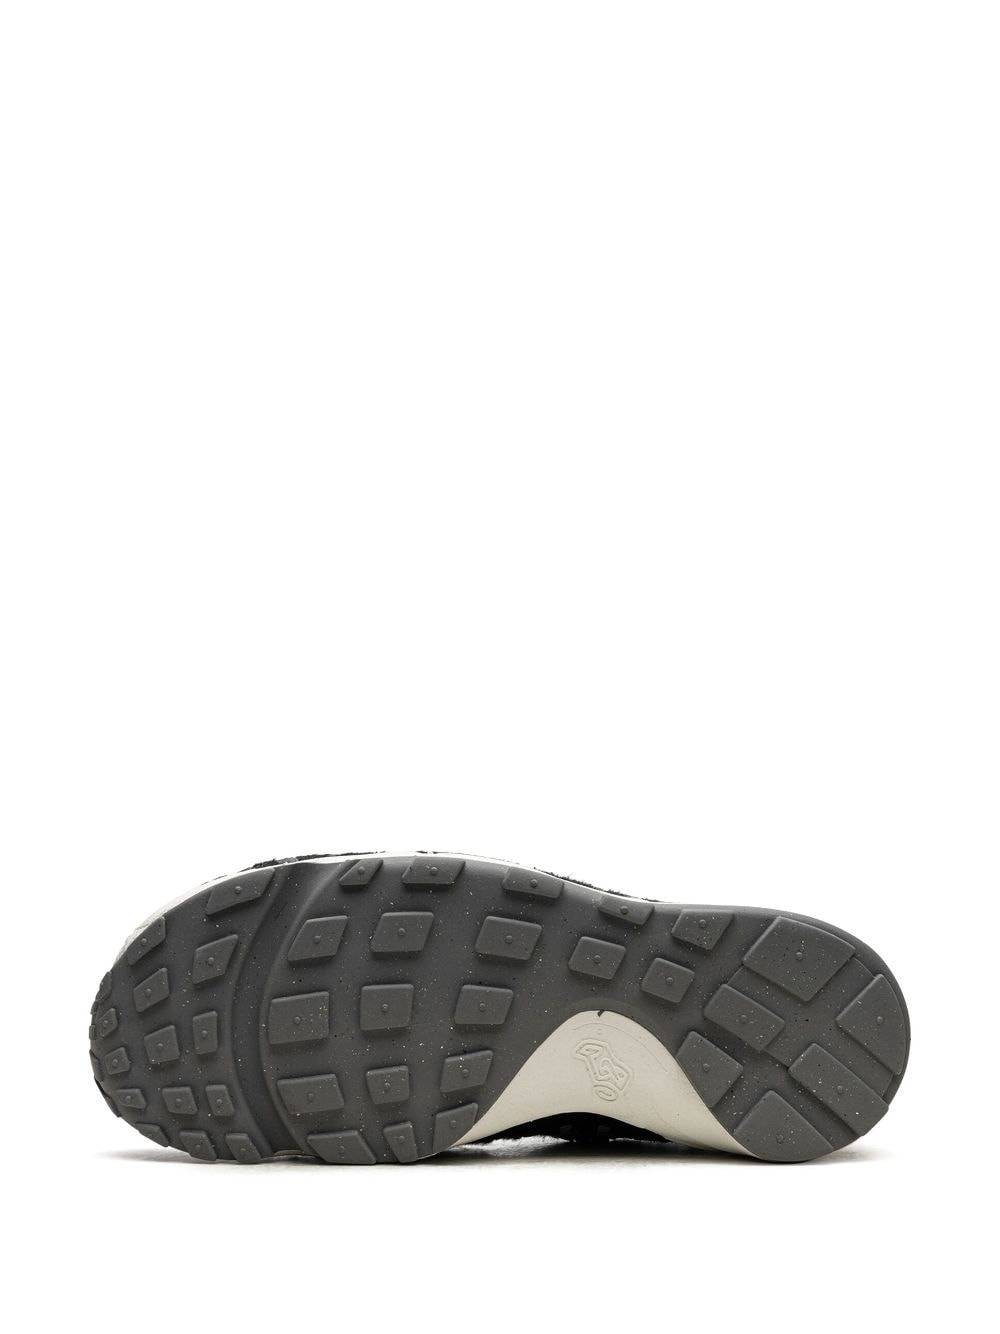 AIR FOOTSCAPE WOVEN BLACK SMOKE/GREY 运动鞋